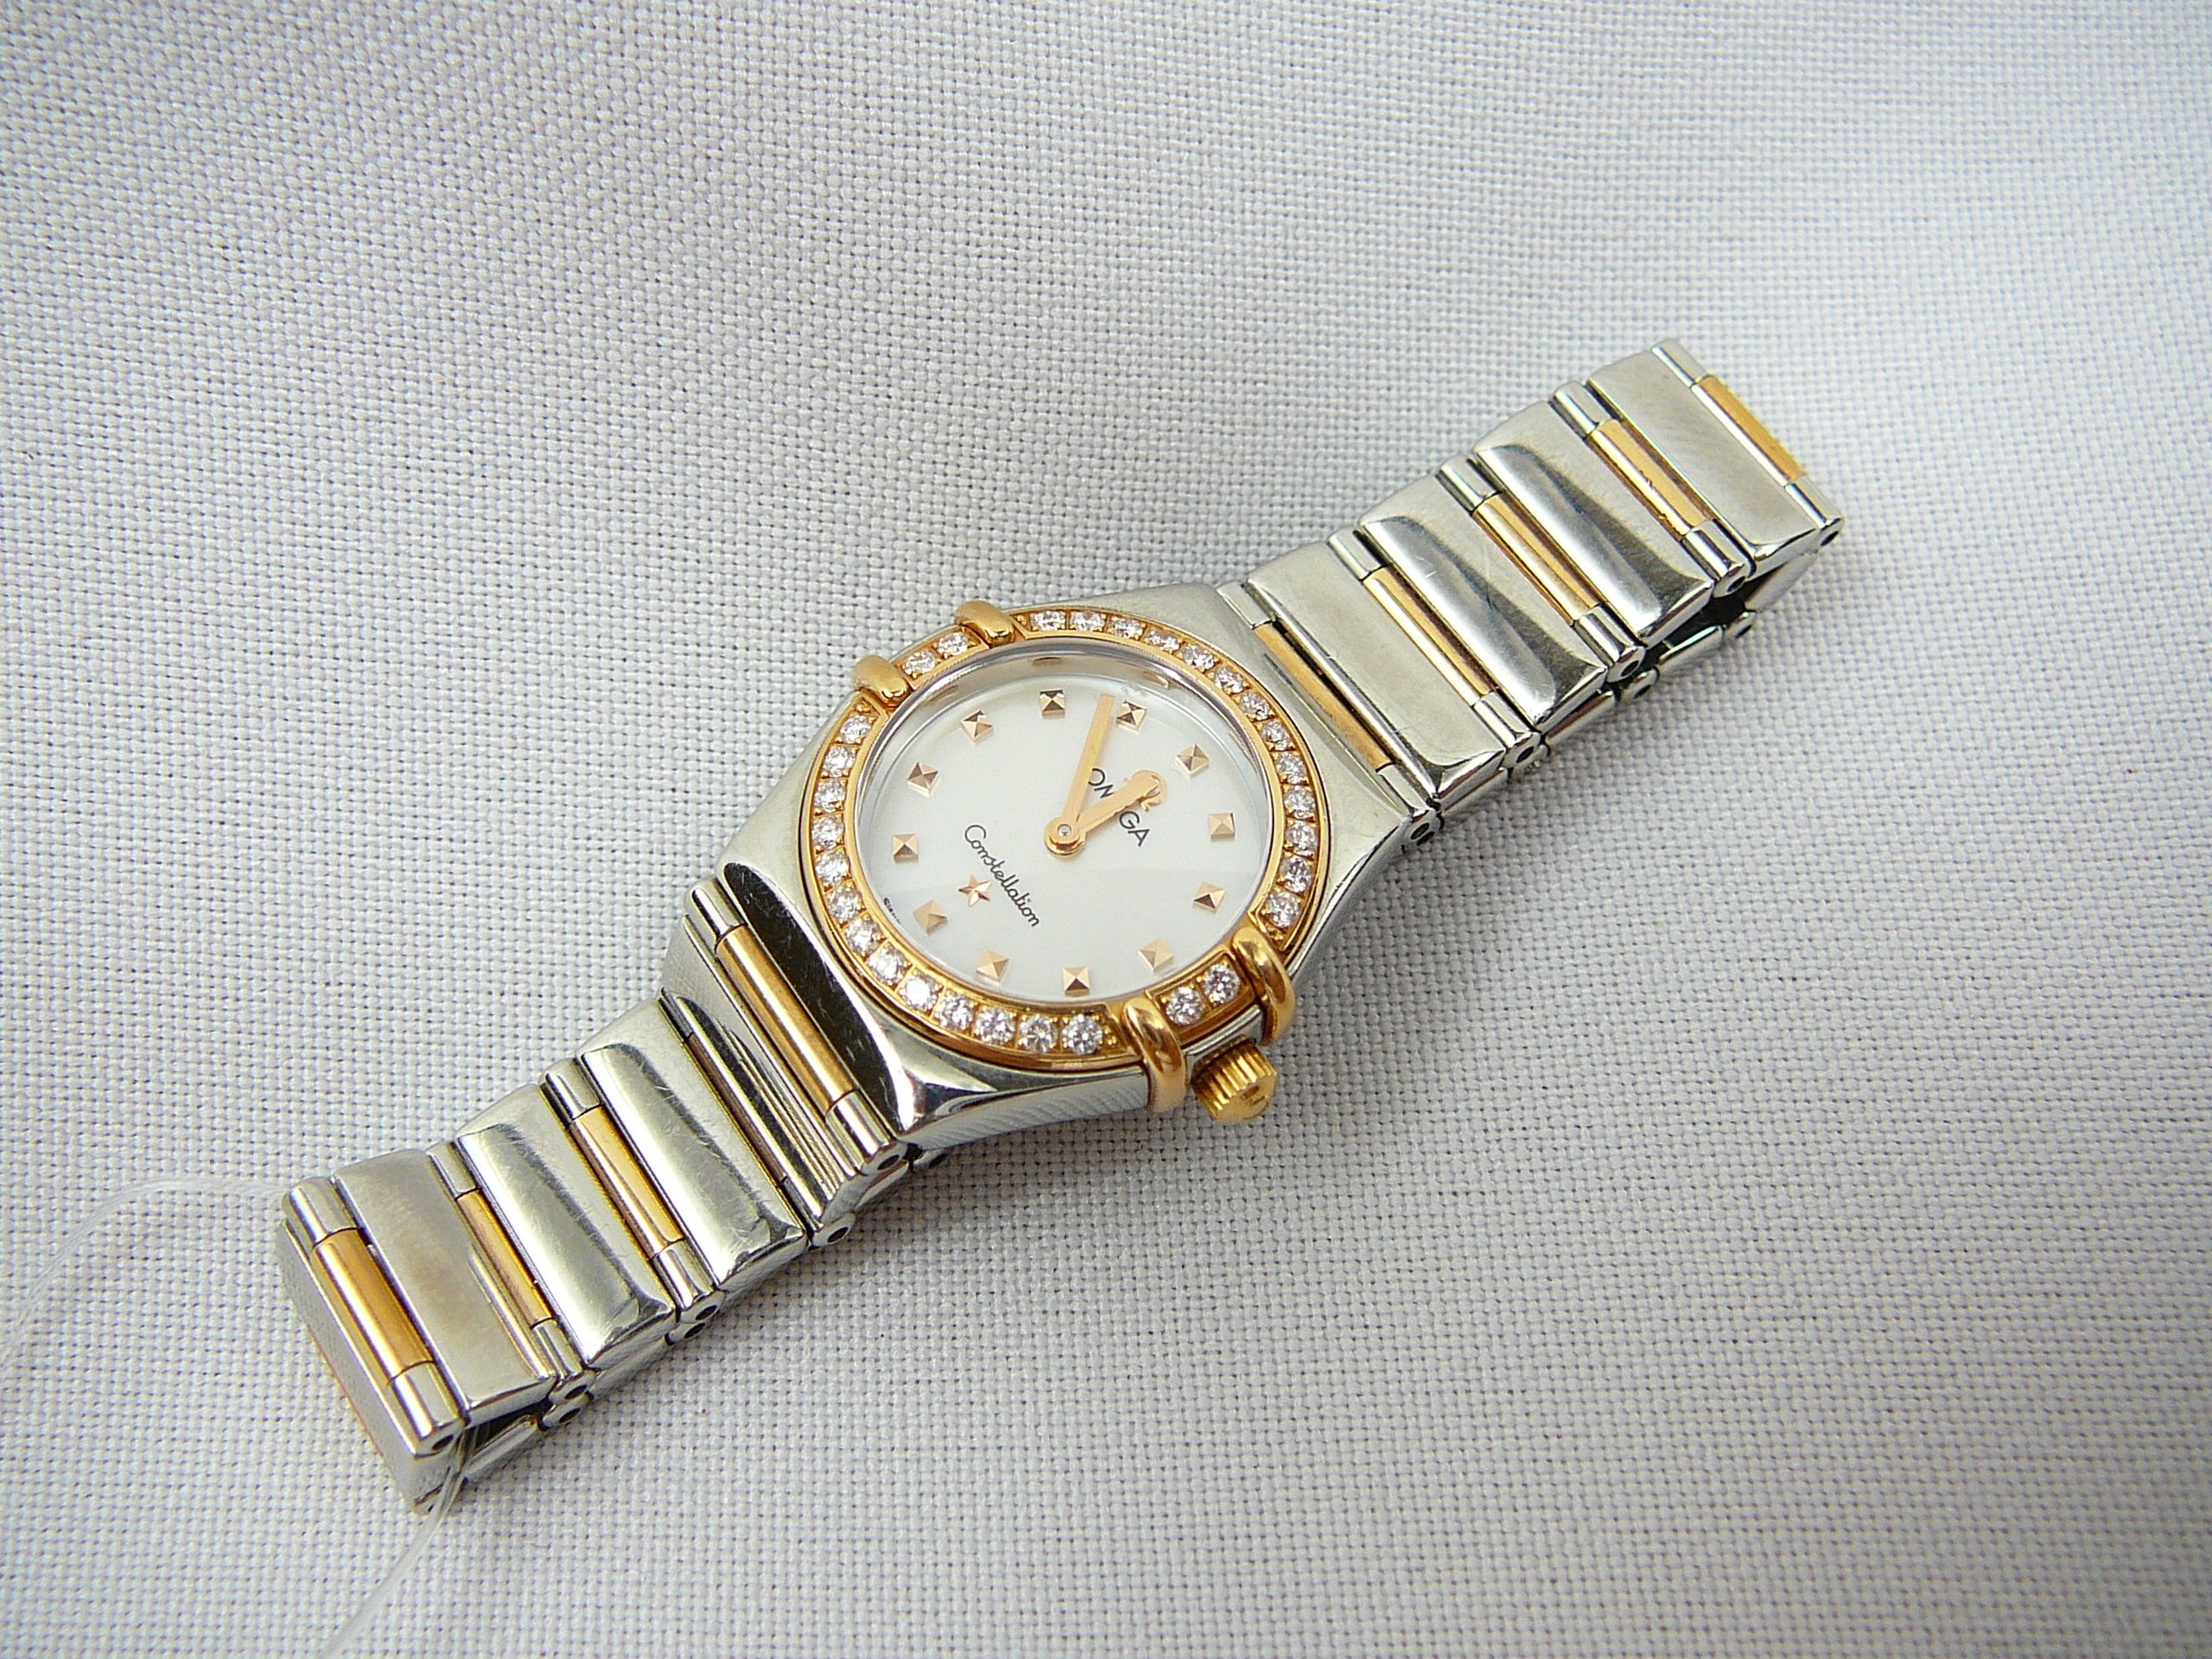 Ladies Omega wrist watch